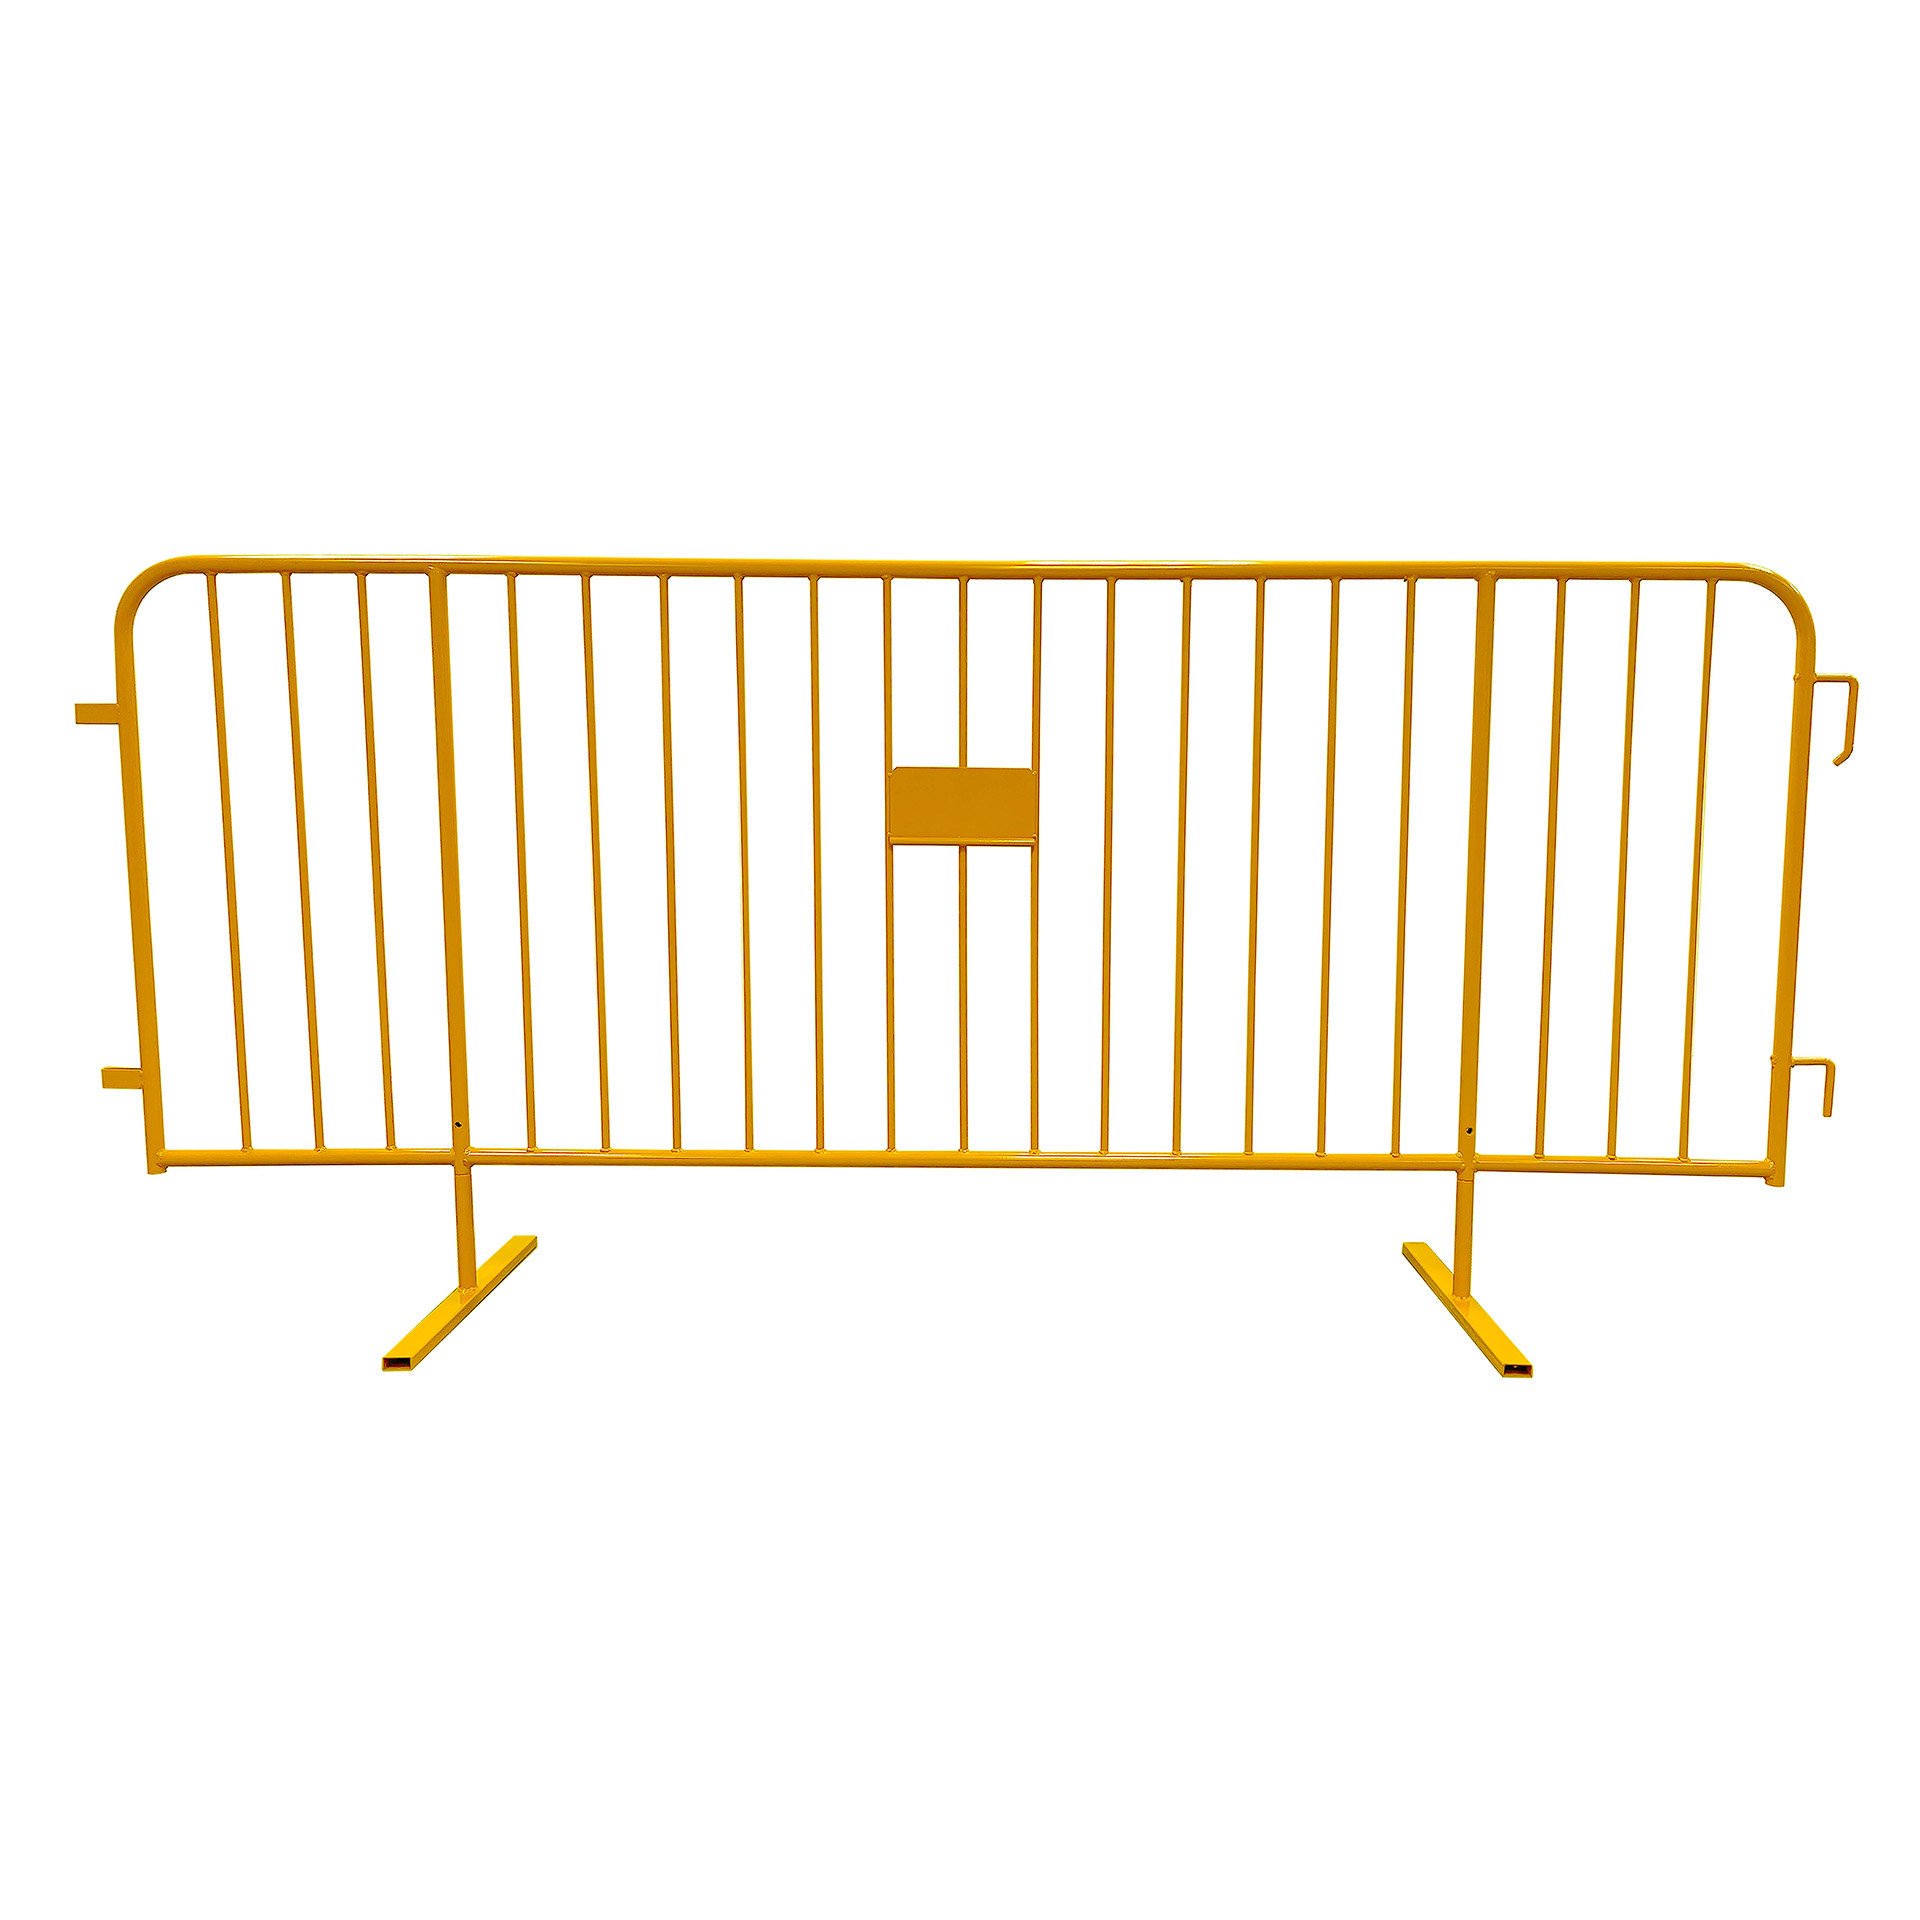 Yellow 1 inch barricade